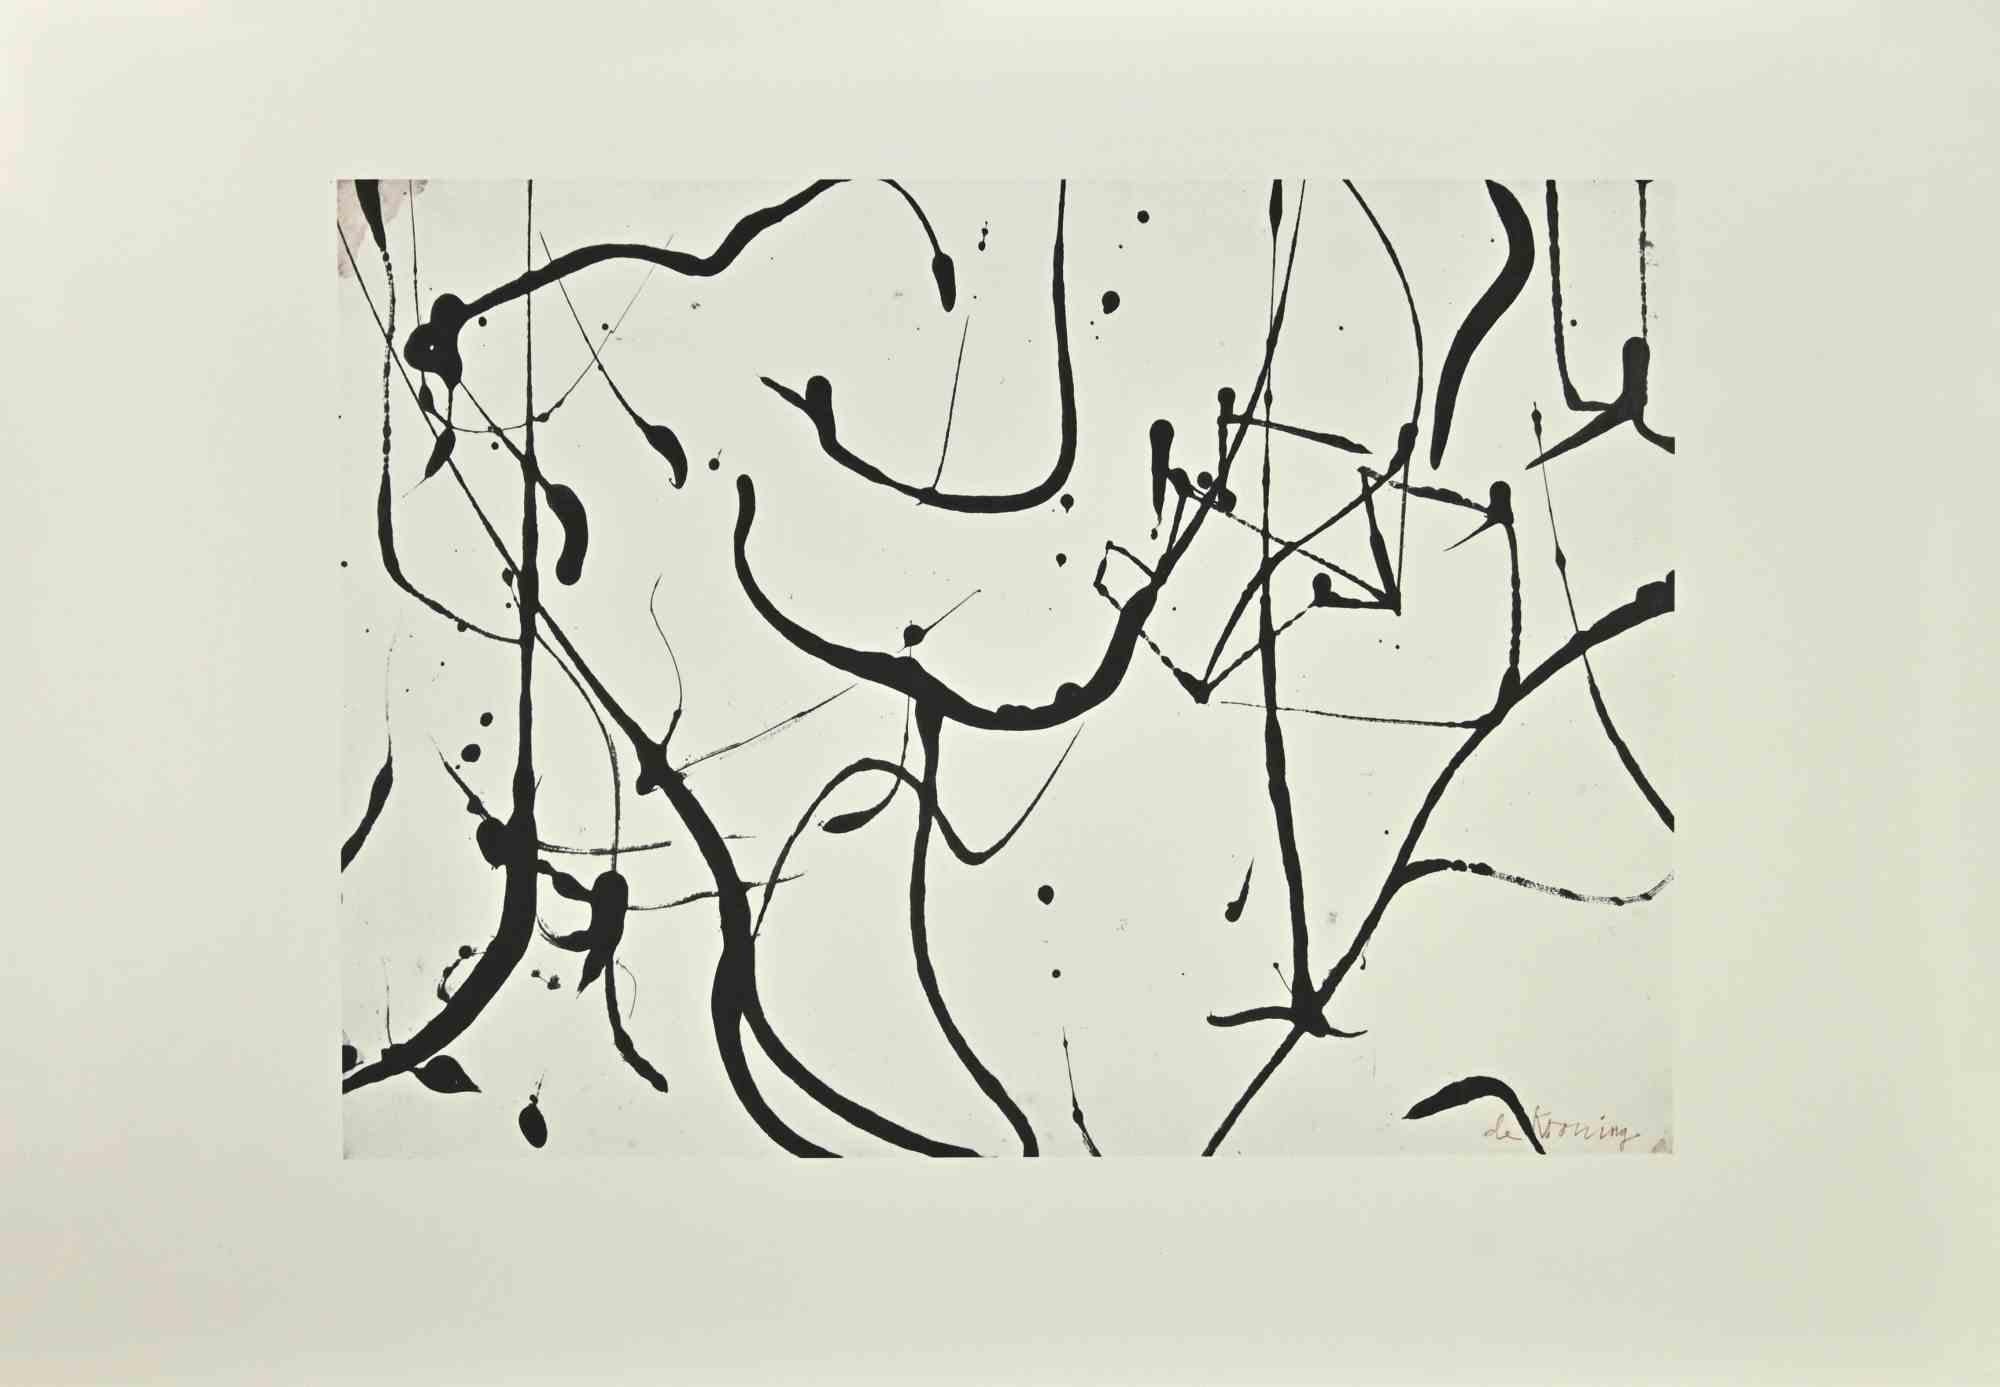 Abstract Print Willem de Kooning - Abstrait - Offset et lithographie d'après Willem De Kooning - 1985